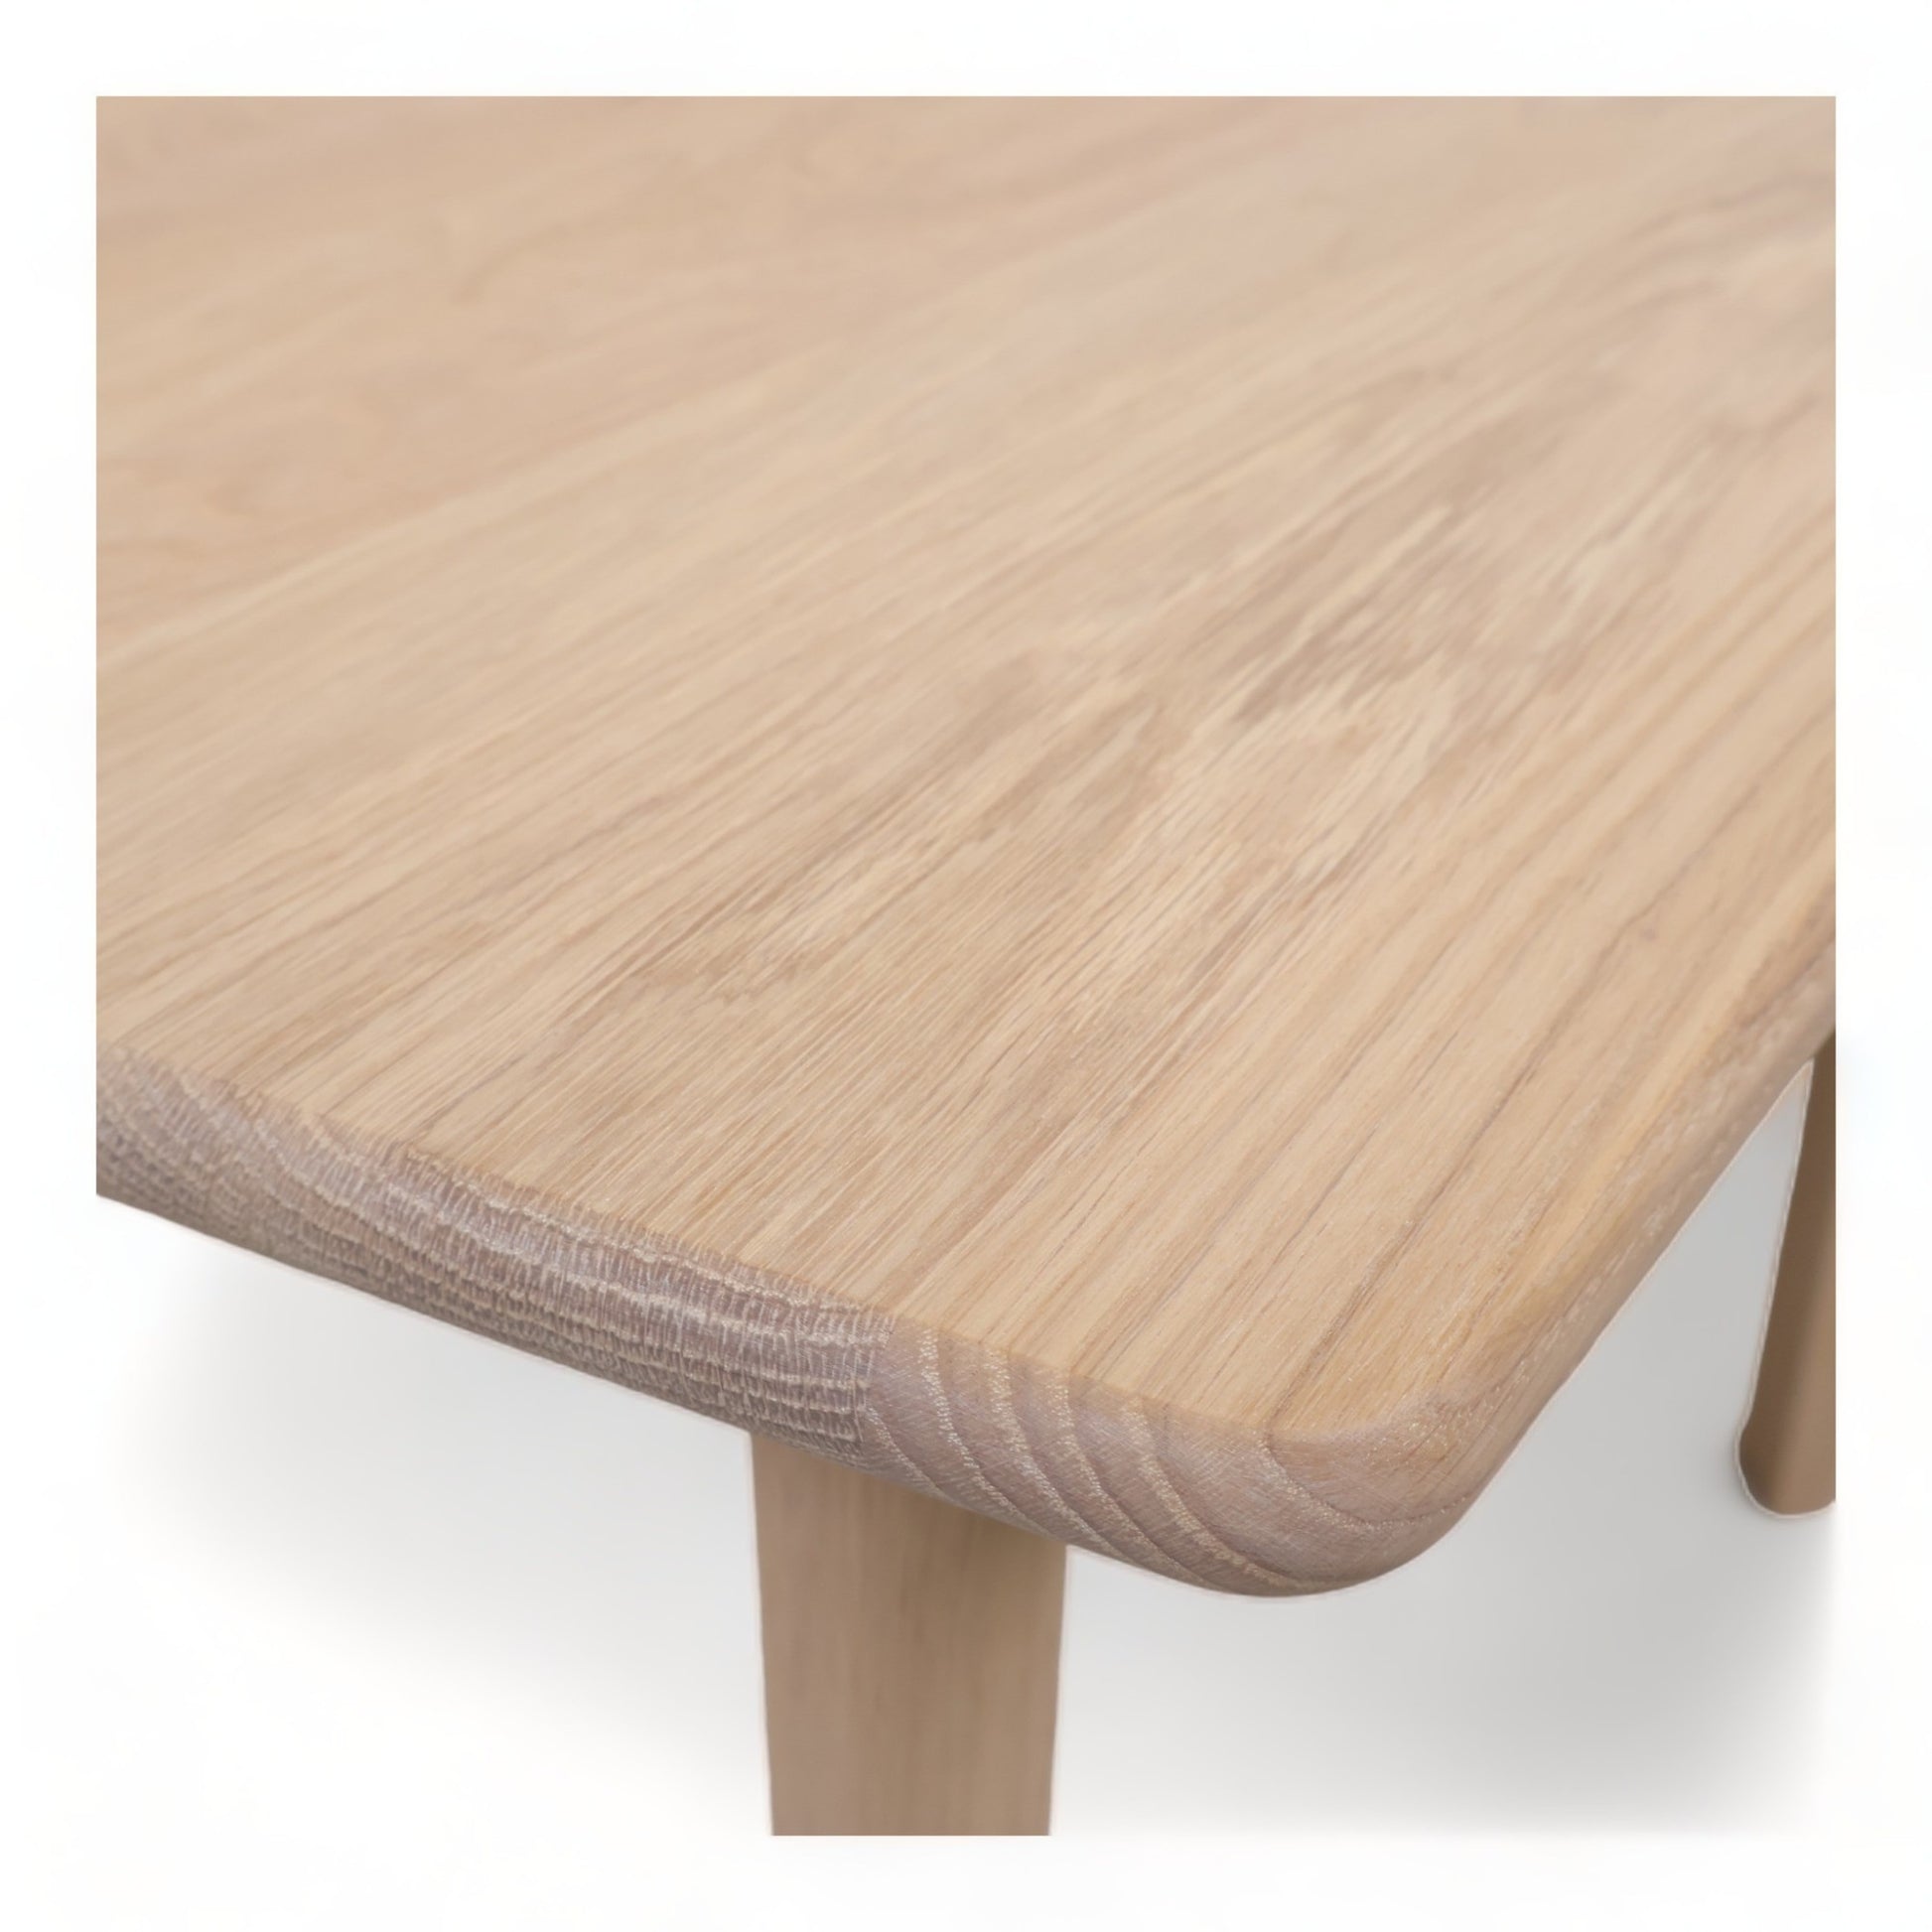 Helt nytt | Casø 600 spisebord i eik fra A-Møbler